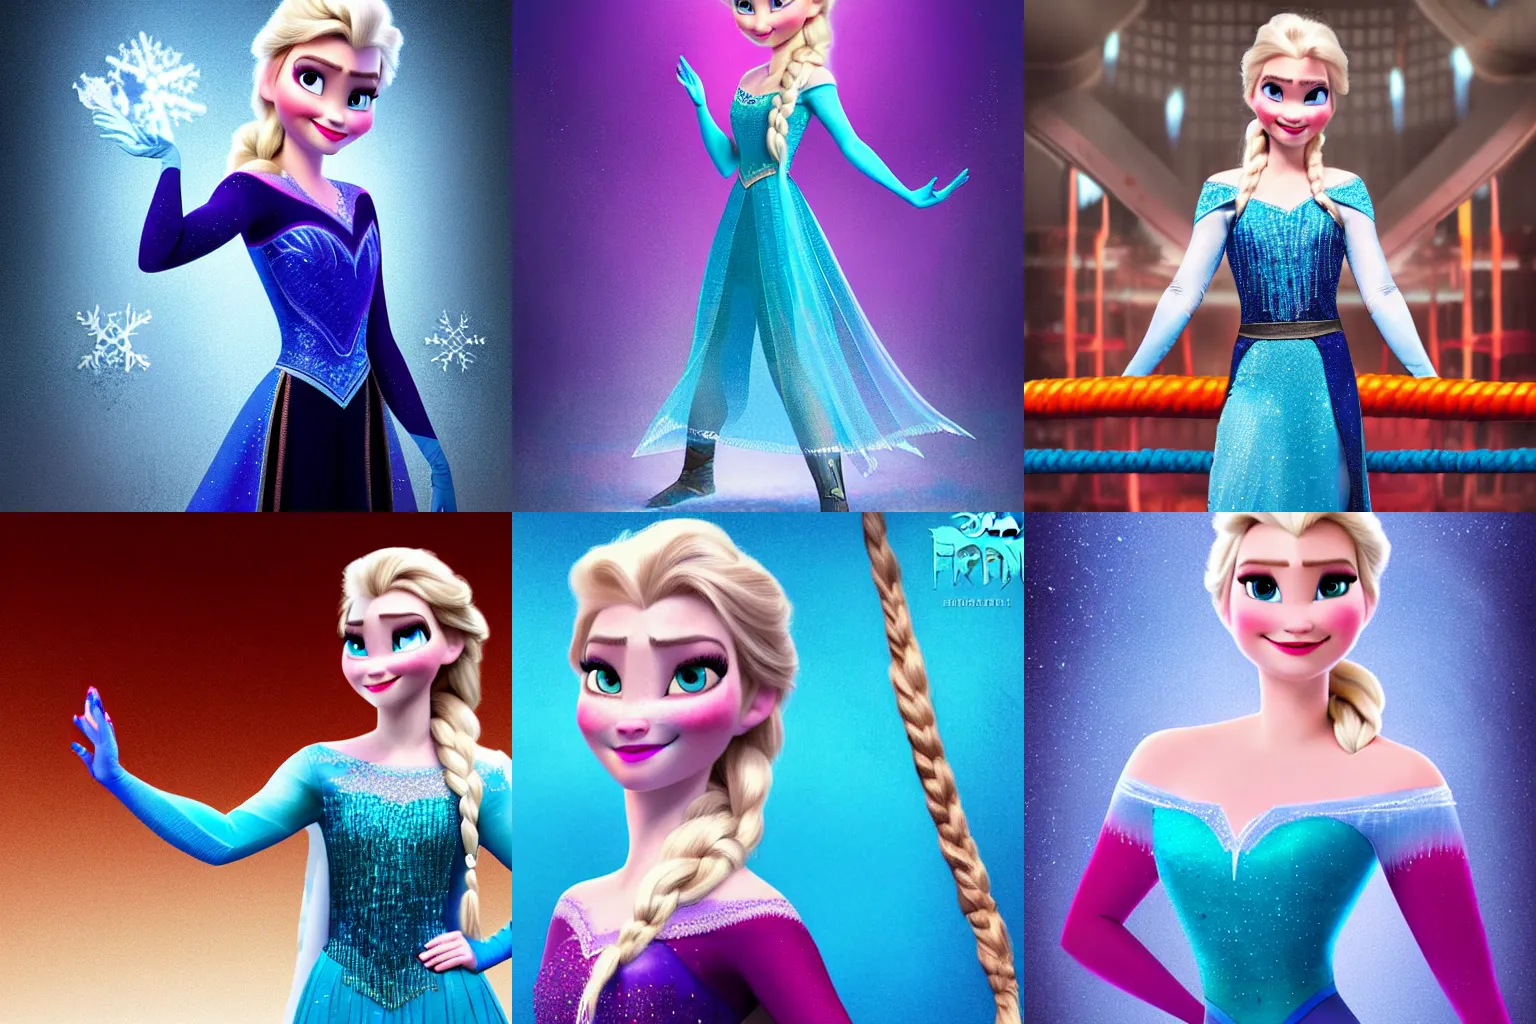 Prompt: Elsa from Frozen promo shot for professional wrestling, digital art, photography, Ralph breaks the internet